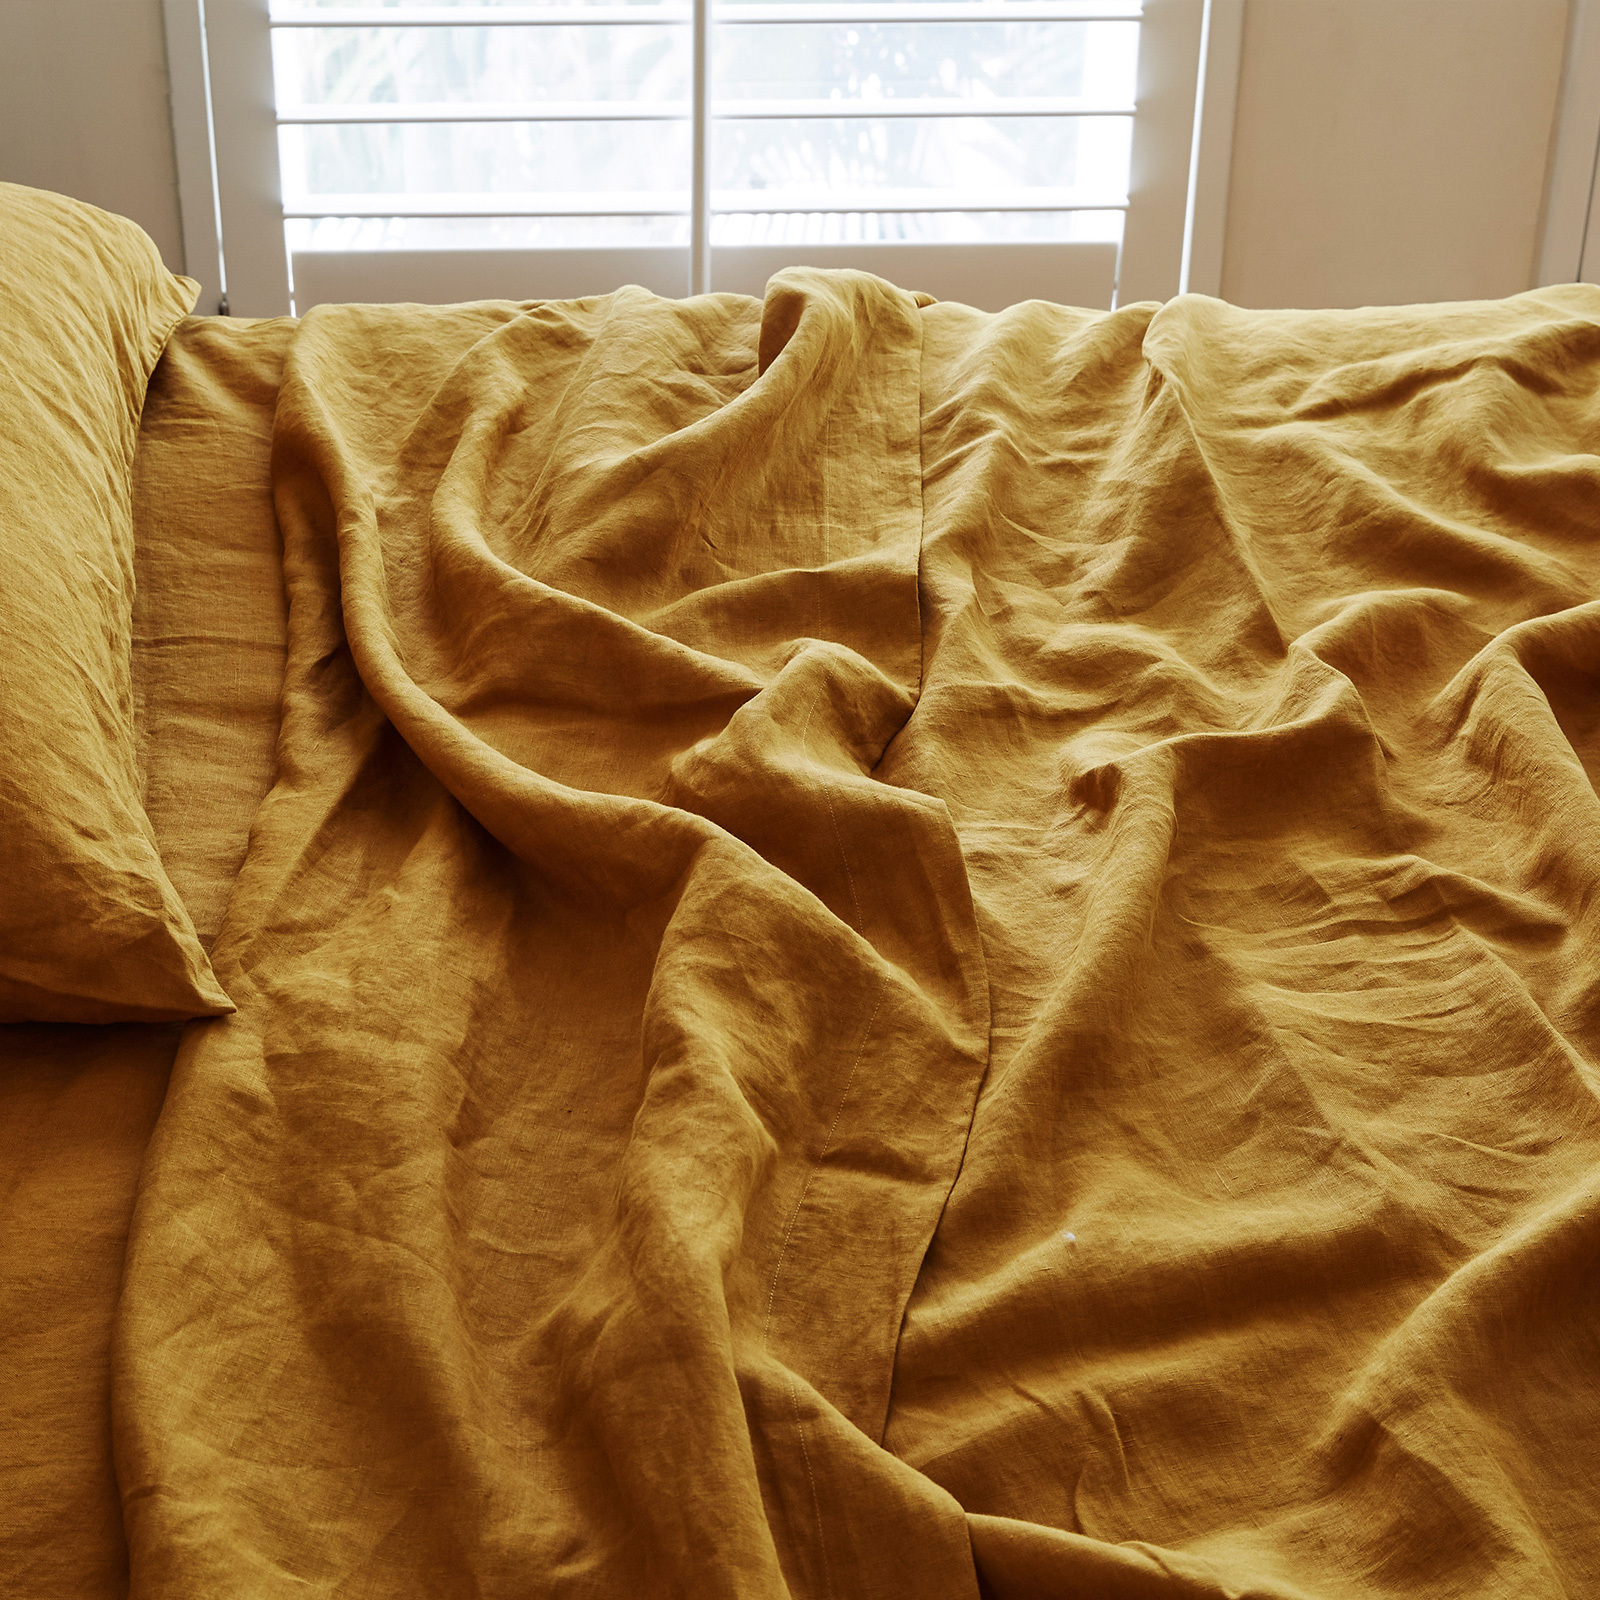 French linen flat sheet in Mustard